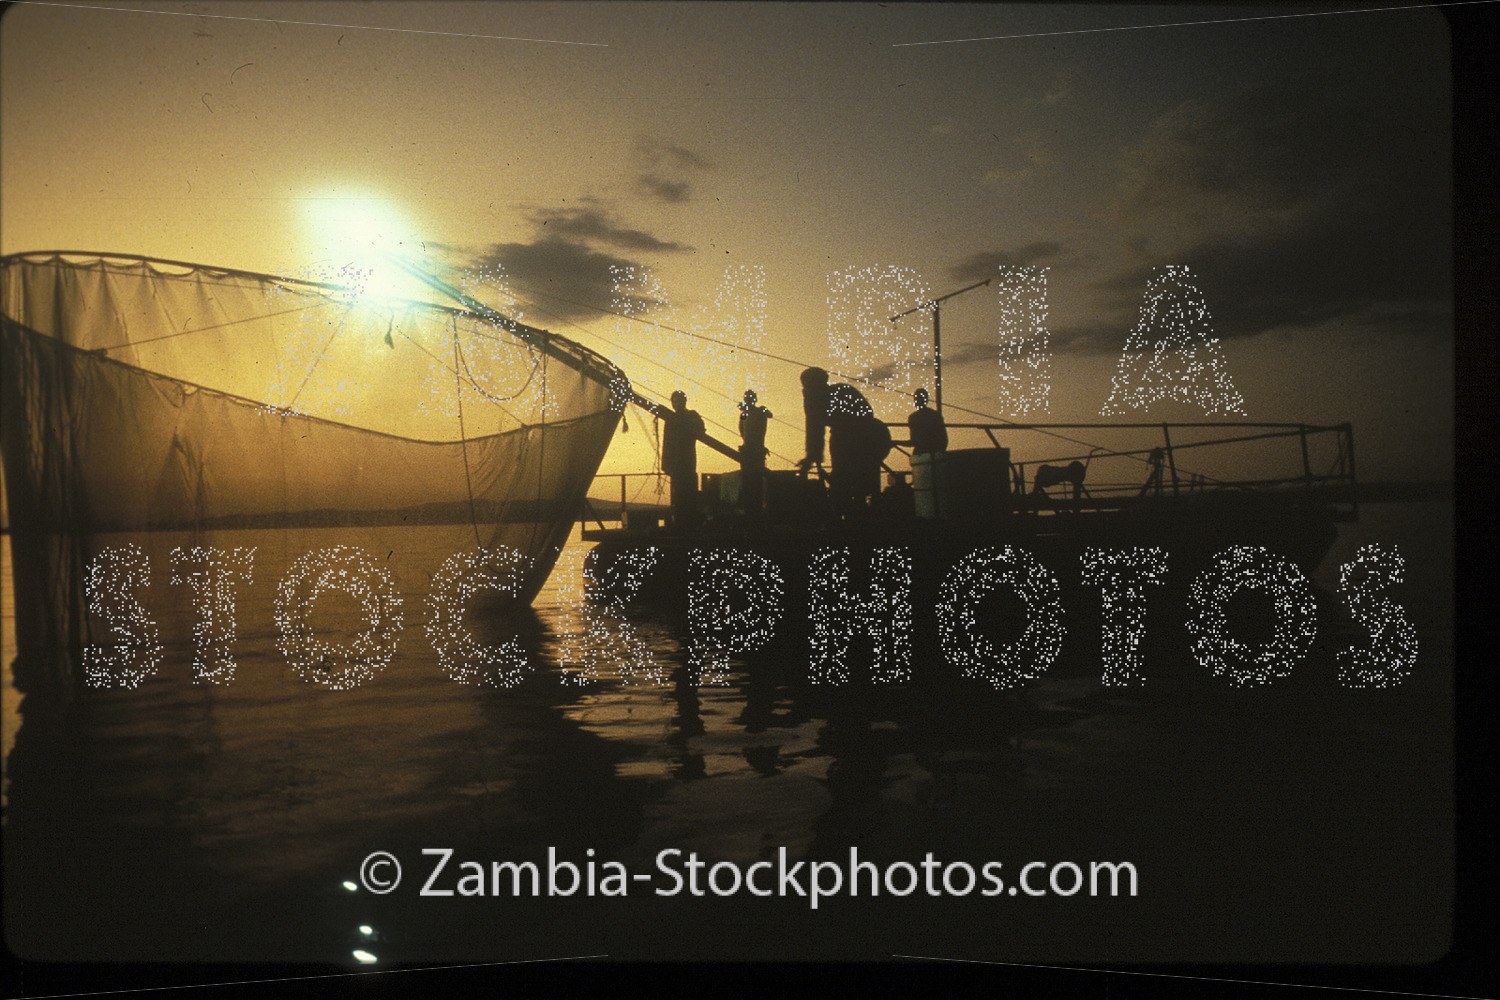 AGR_kapenta-fishing-jpg - Zamstockphotos.com